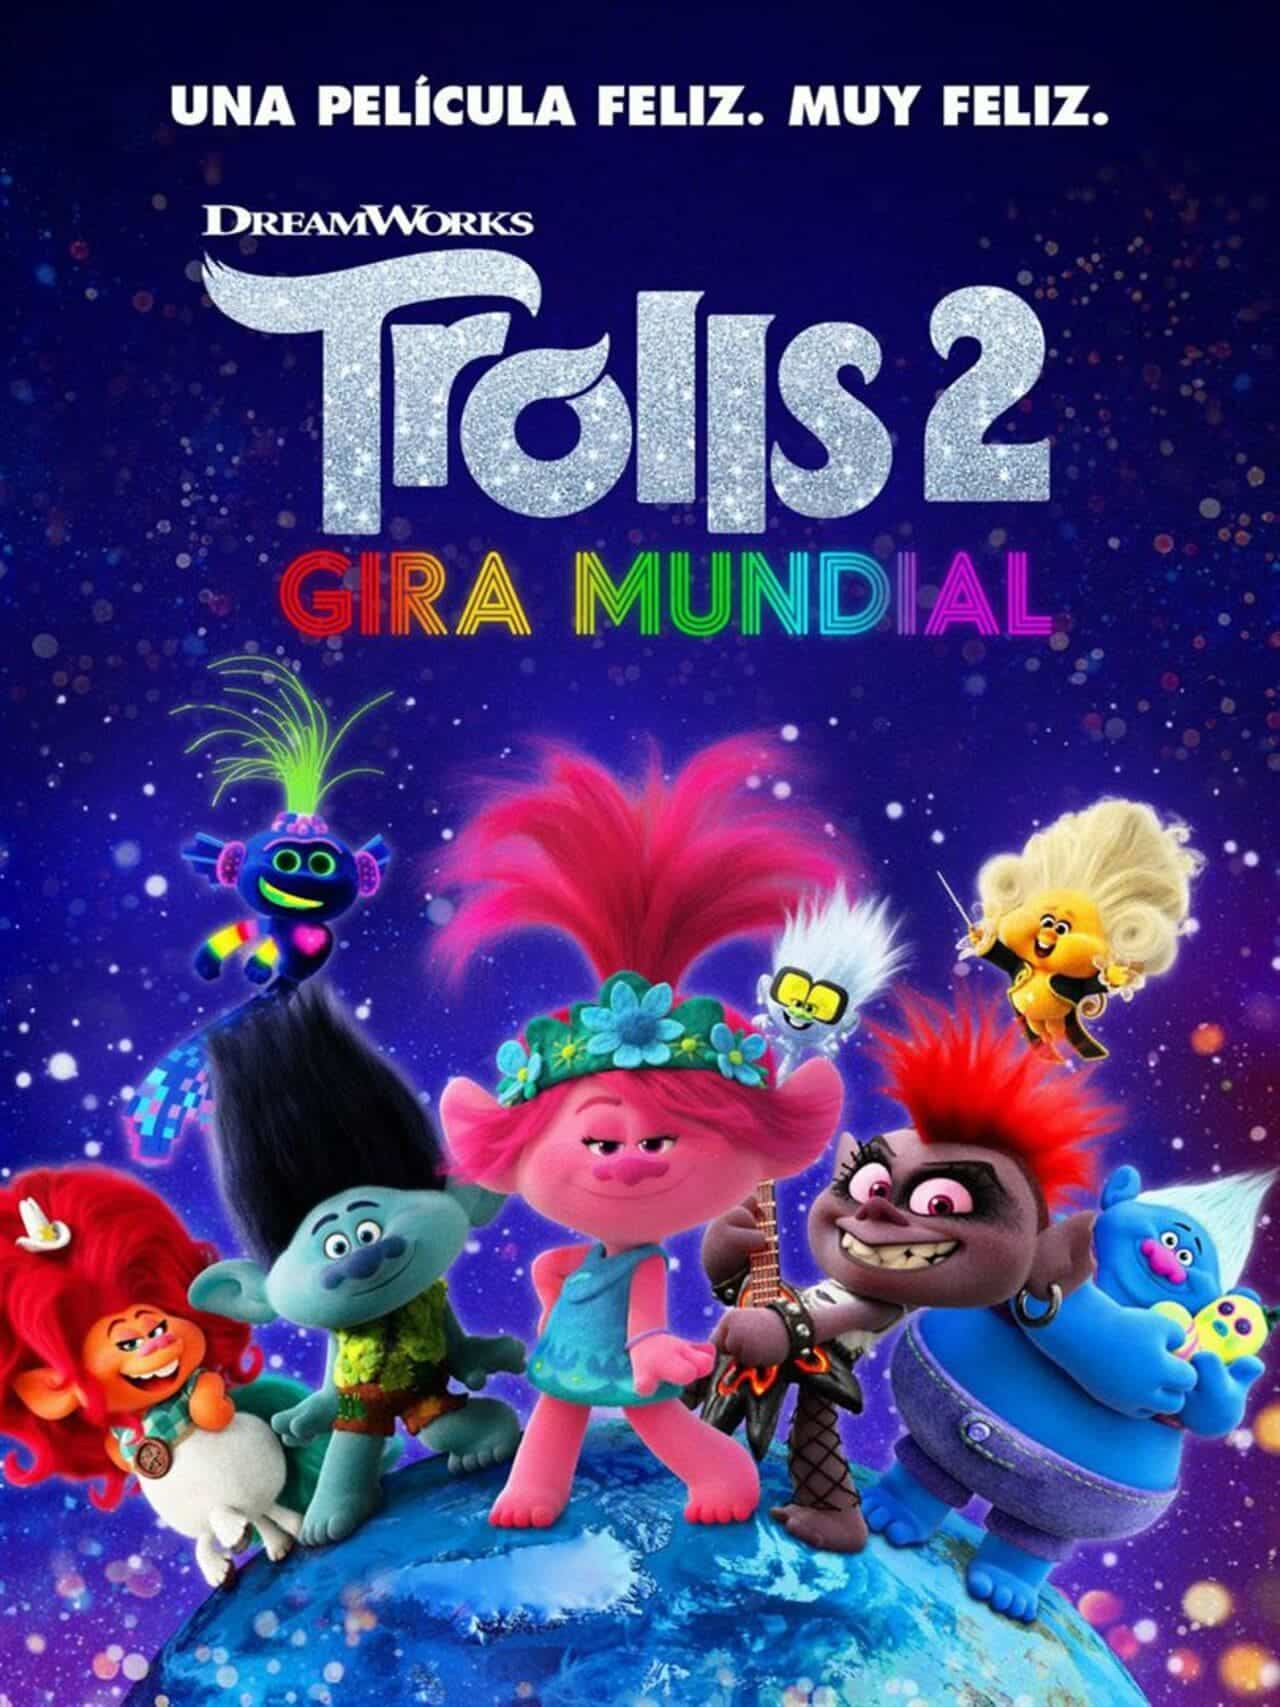 Cartel de la película Trolls 2: Gira mundial